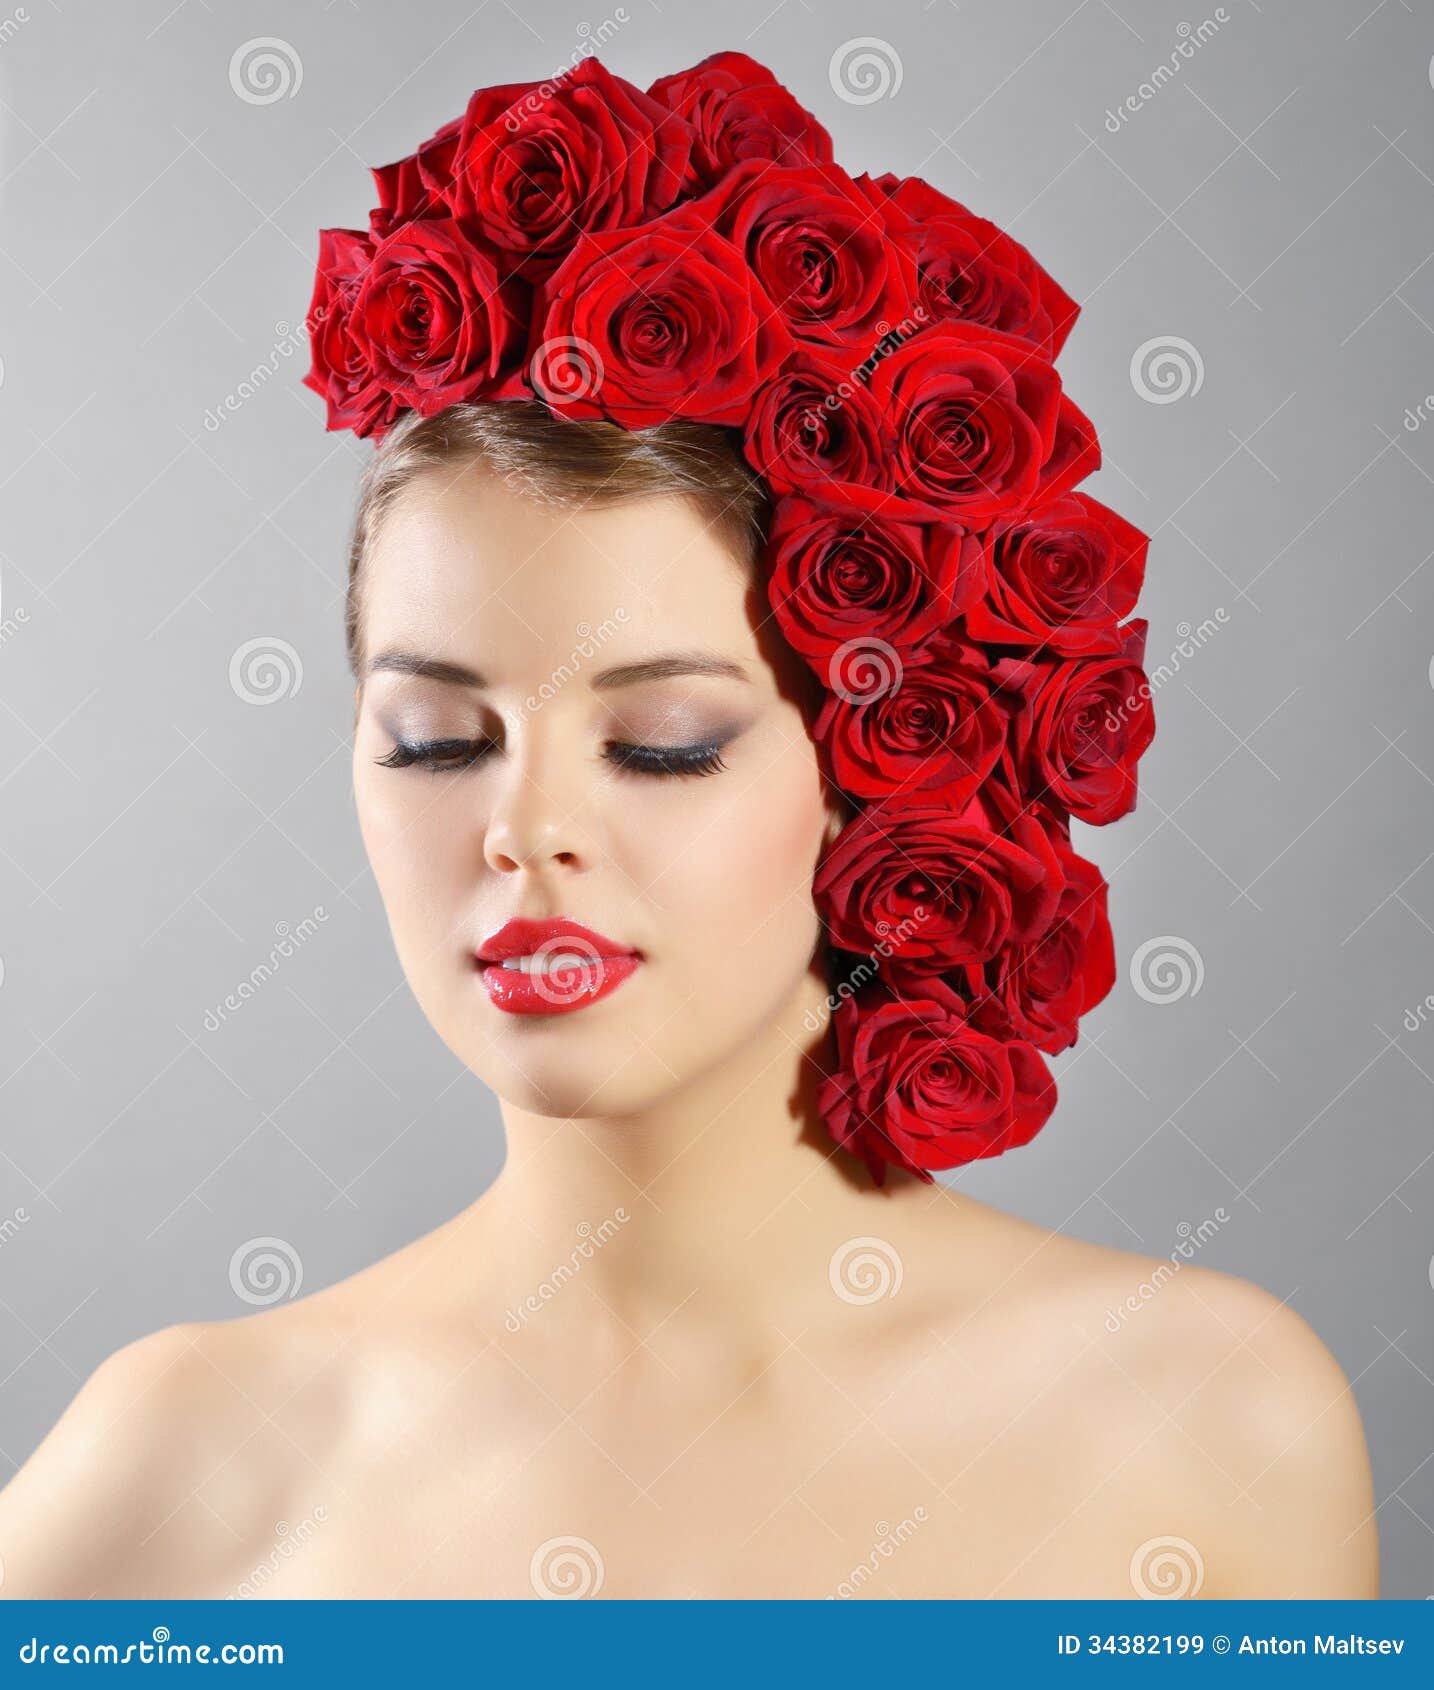 Accessorise Your Hair With Roses Like Deepika Priyanka Alia And More